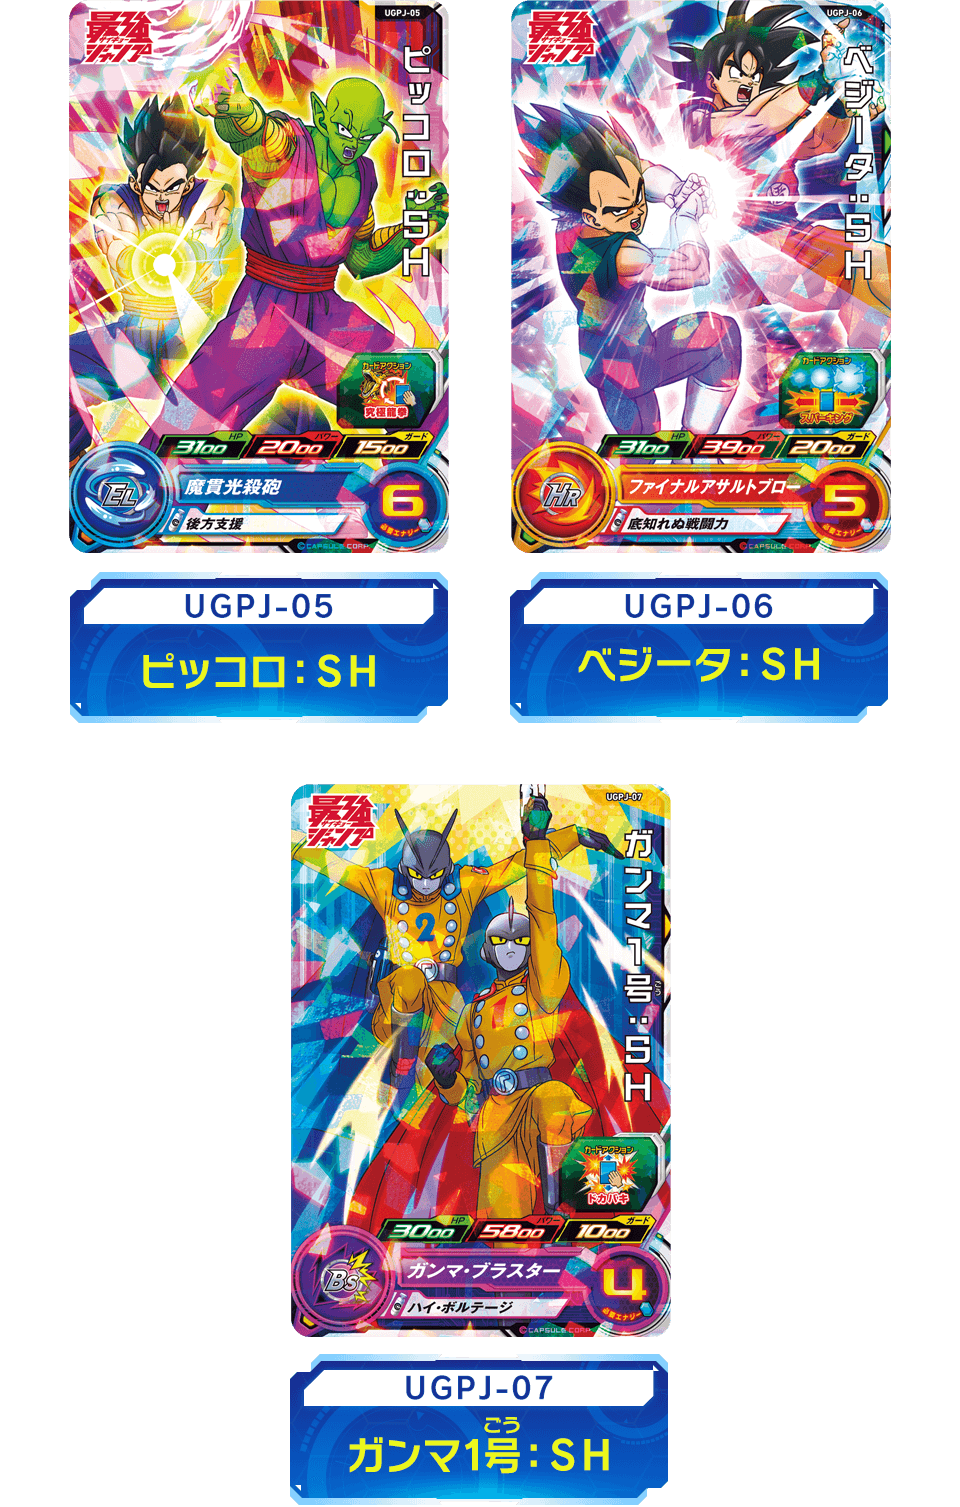 SUPER DRAGON BALL HEROES UGPJ-05 UGPJ-06 UGPJ-07 in blister  Promotional card sold with the June 2022 issue of Saikyo Jump magazine released May 2 2022.      UGPJ-05 Piccolo : SH     UGPJ-06 Vegeta : SH     UGPJ-07 Ganma 1 : SH